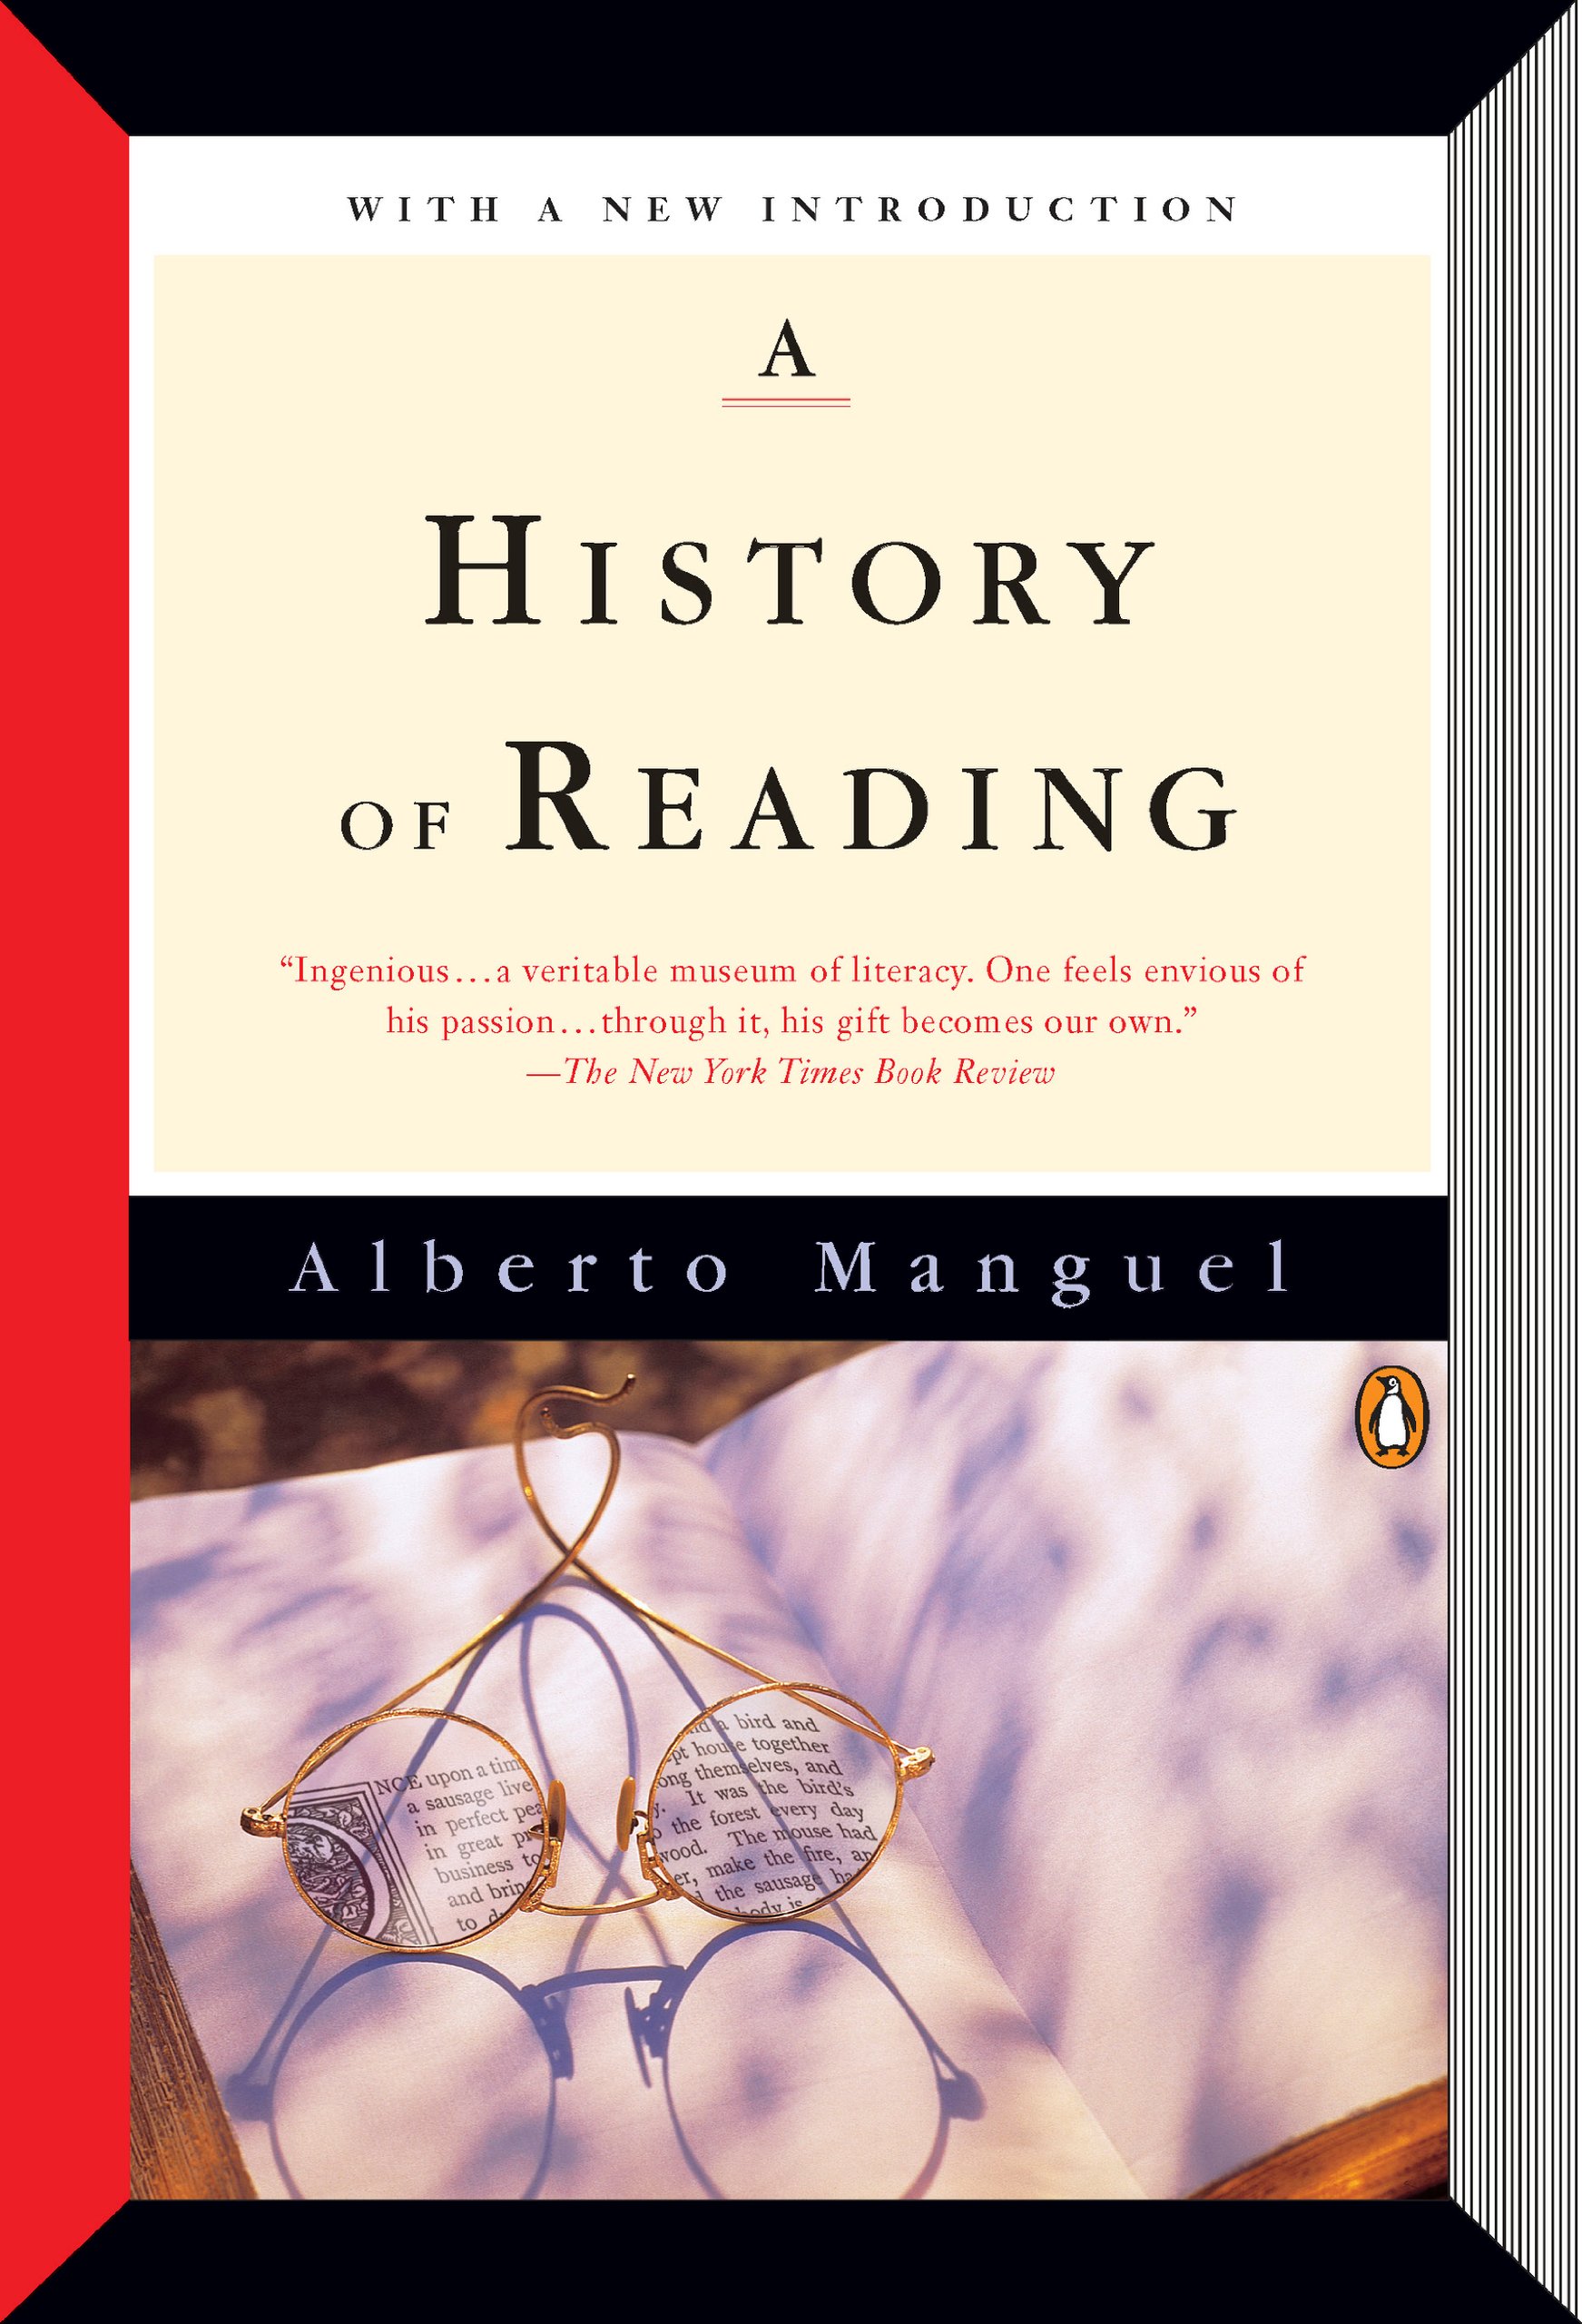 A History of Reading: Alberto Manguel: 9780143126713: Amazon.com: Books